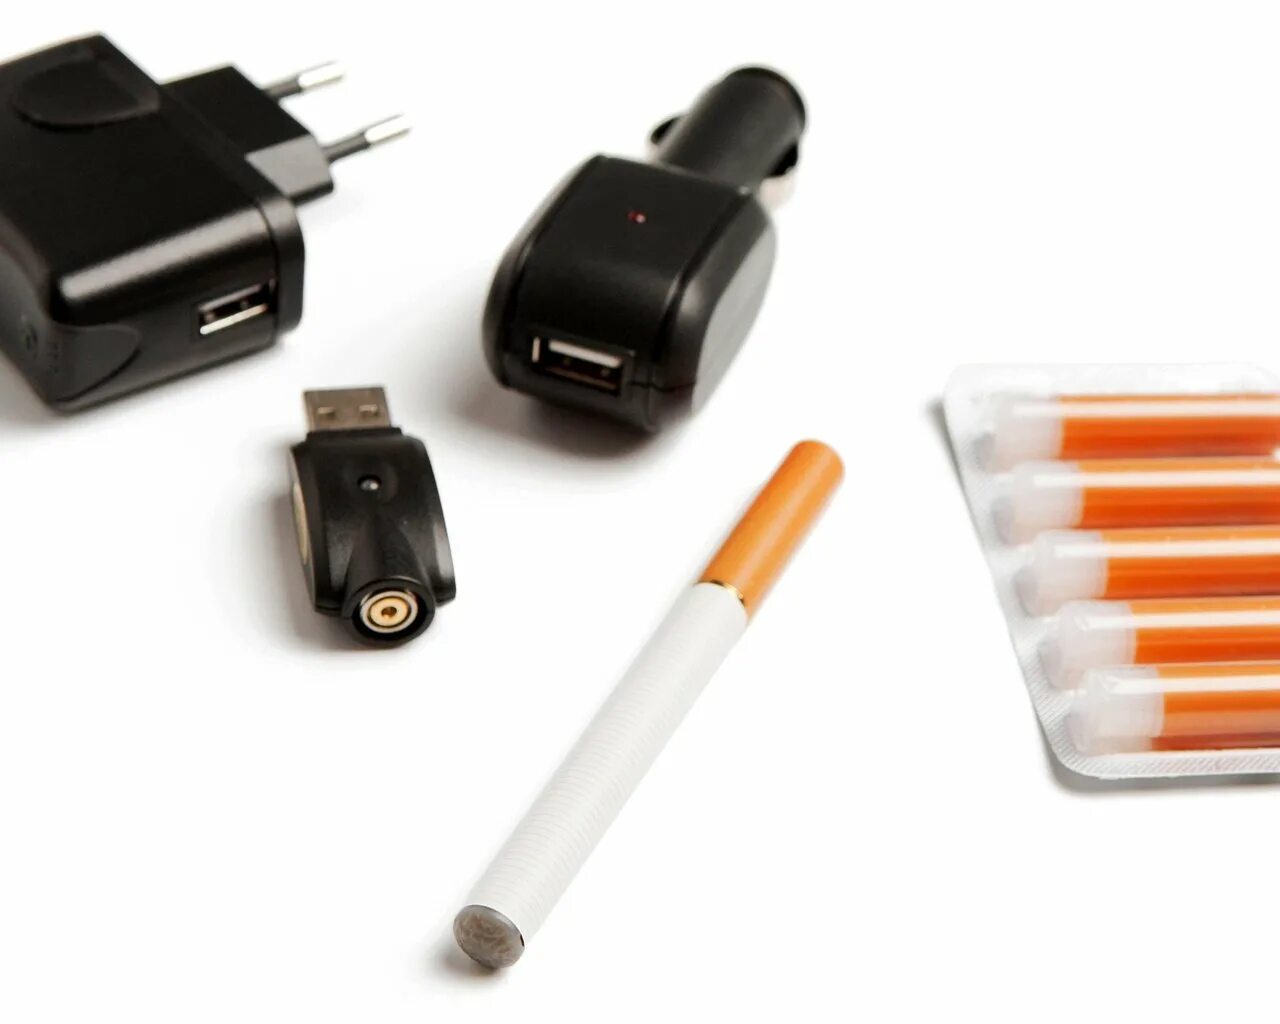 Электронная сигарета мини v9. Planq сигареты электронные 8000. Квант электронные сигареты. Электронные сигареты в пачке.